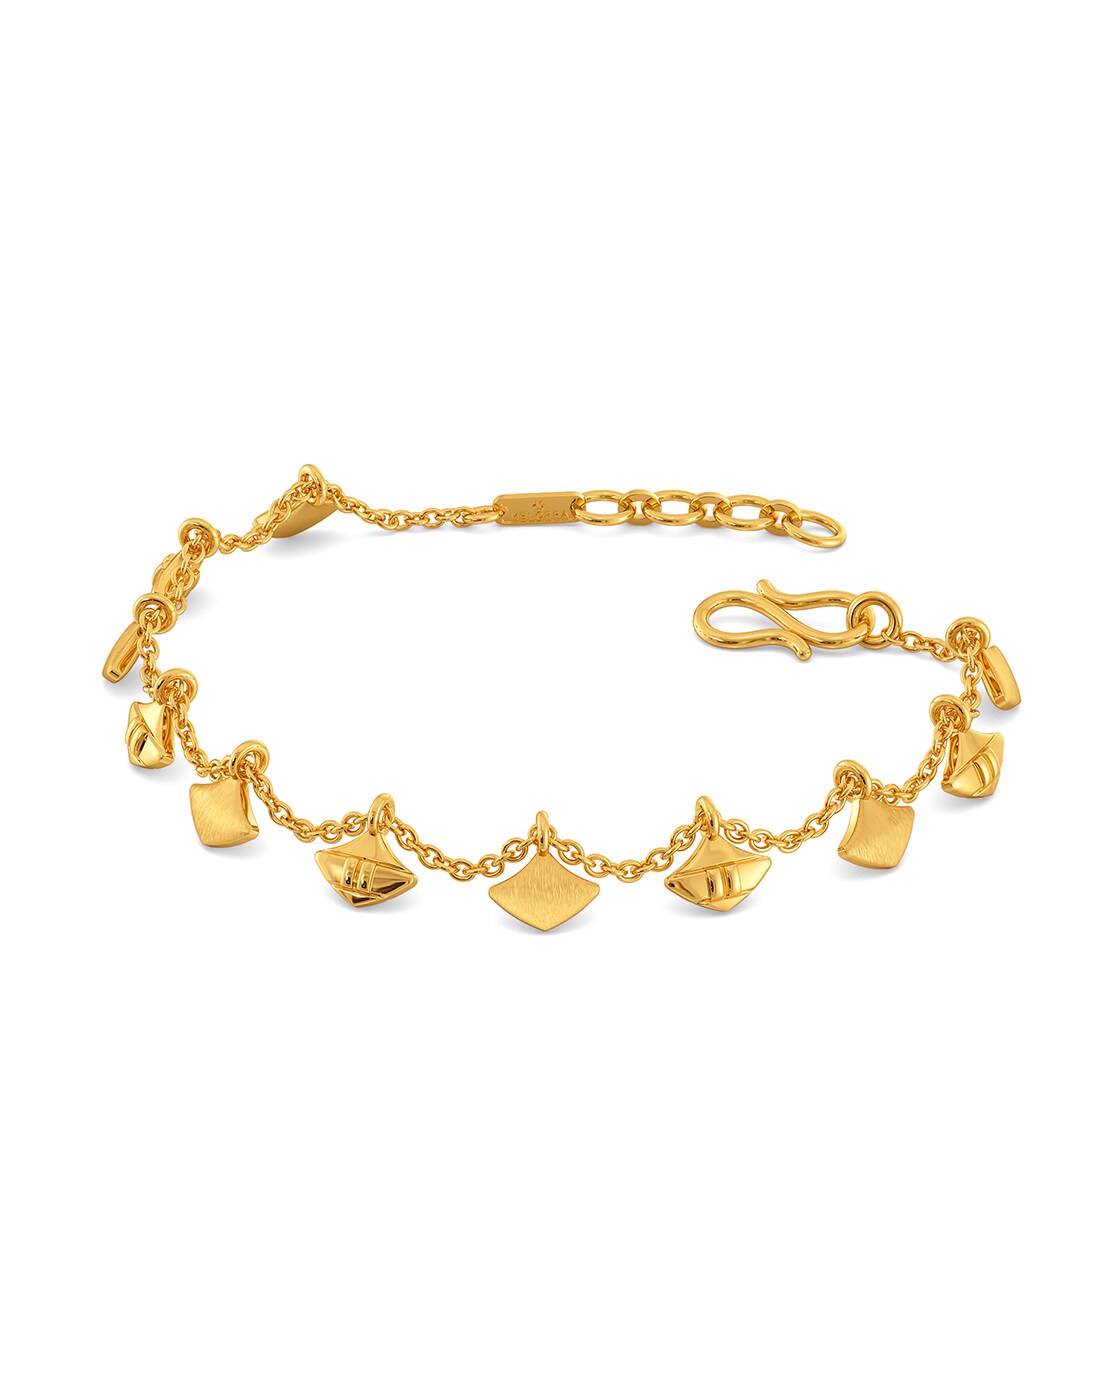 Gold bangles design, Bridal gold jewellery designs, Gold jewelry fashion